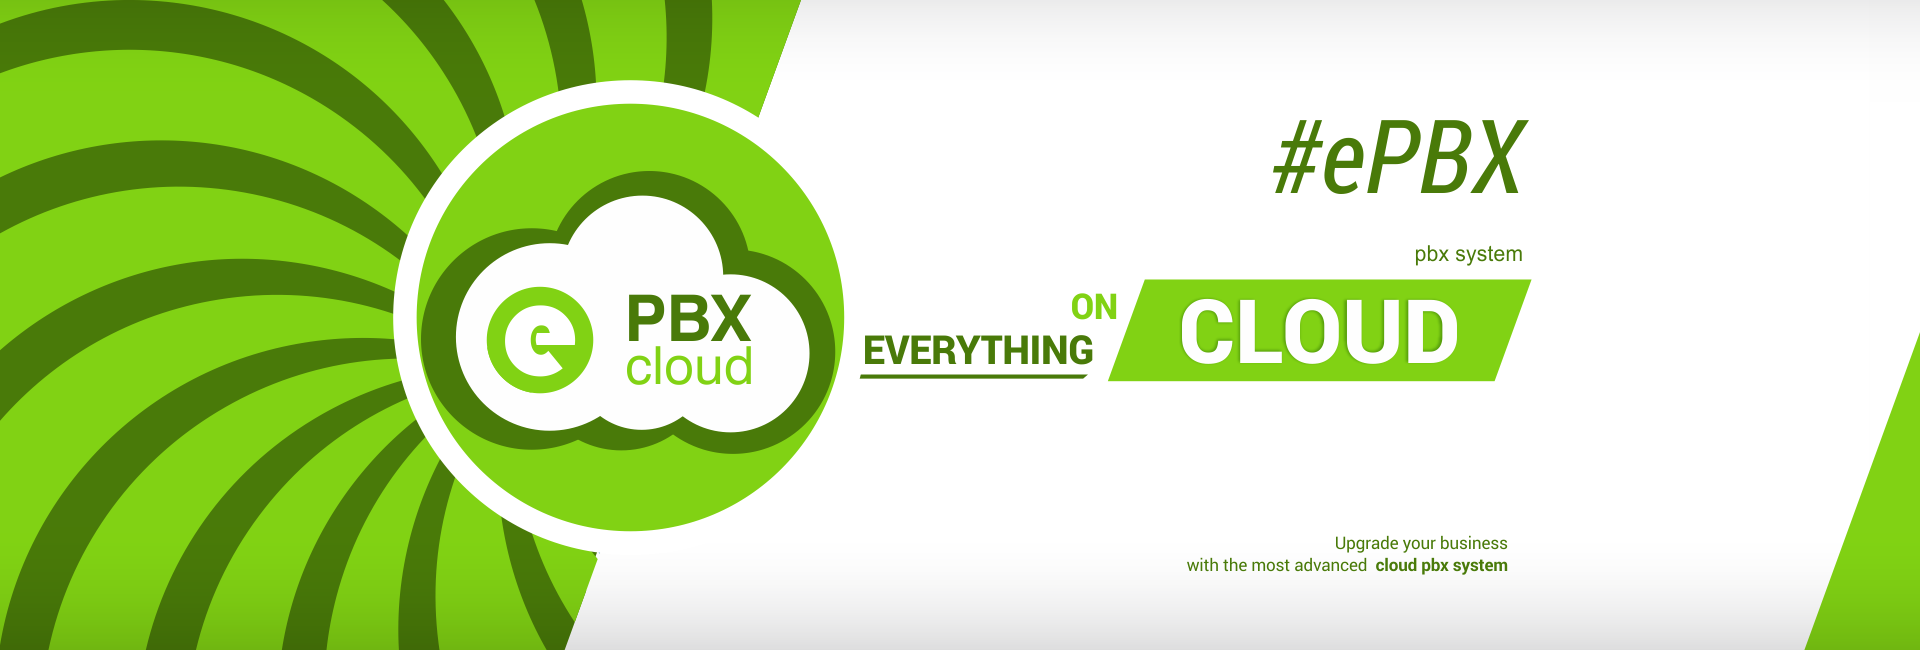 ePBX - Cloud PBX